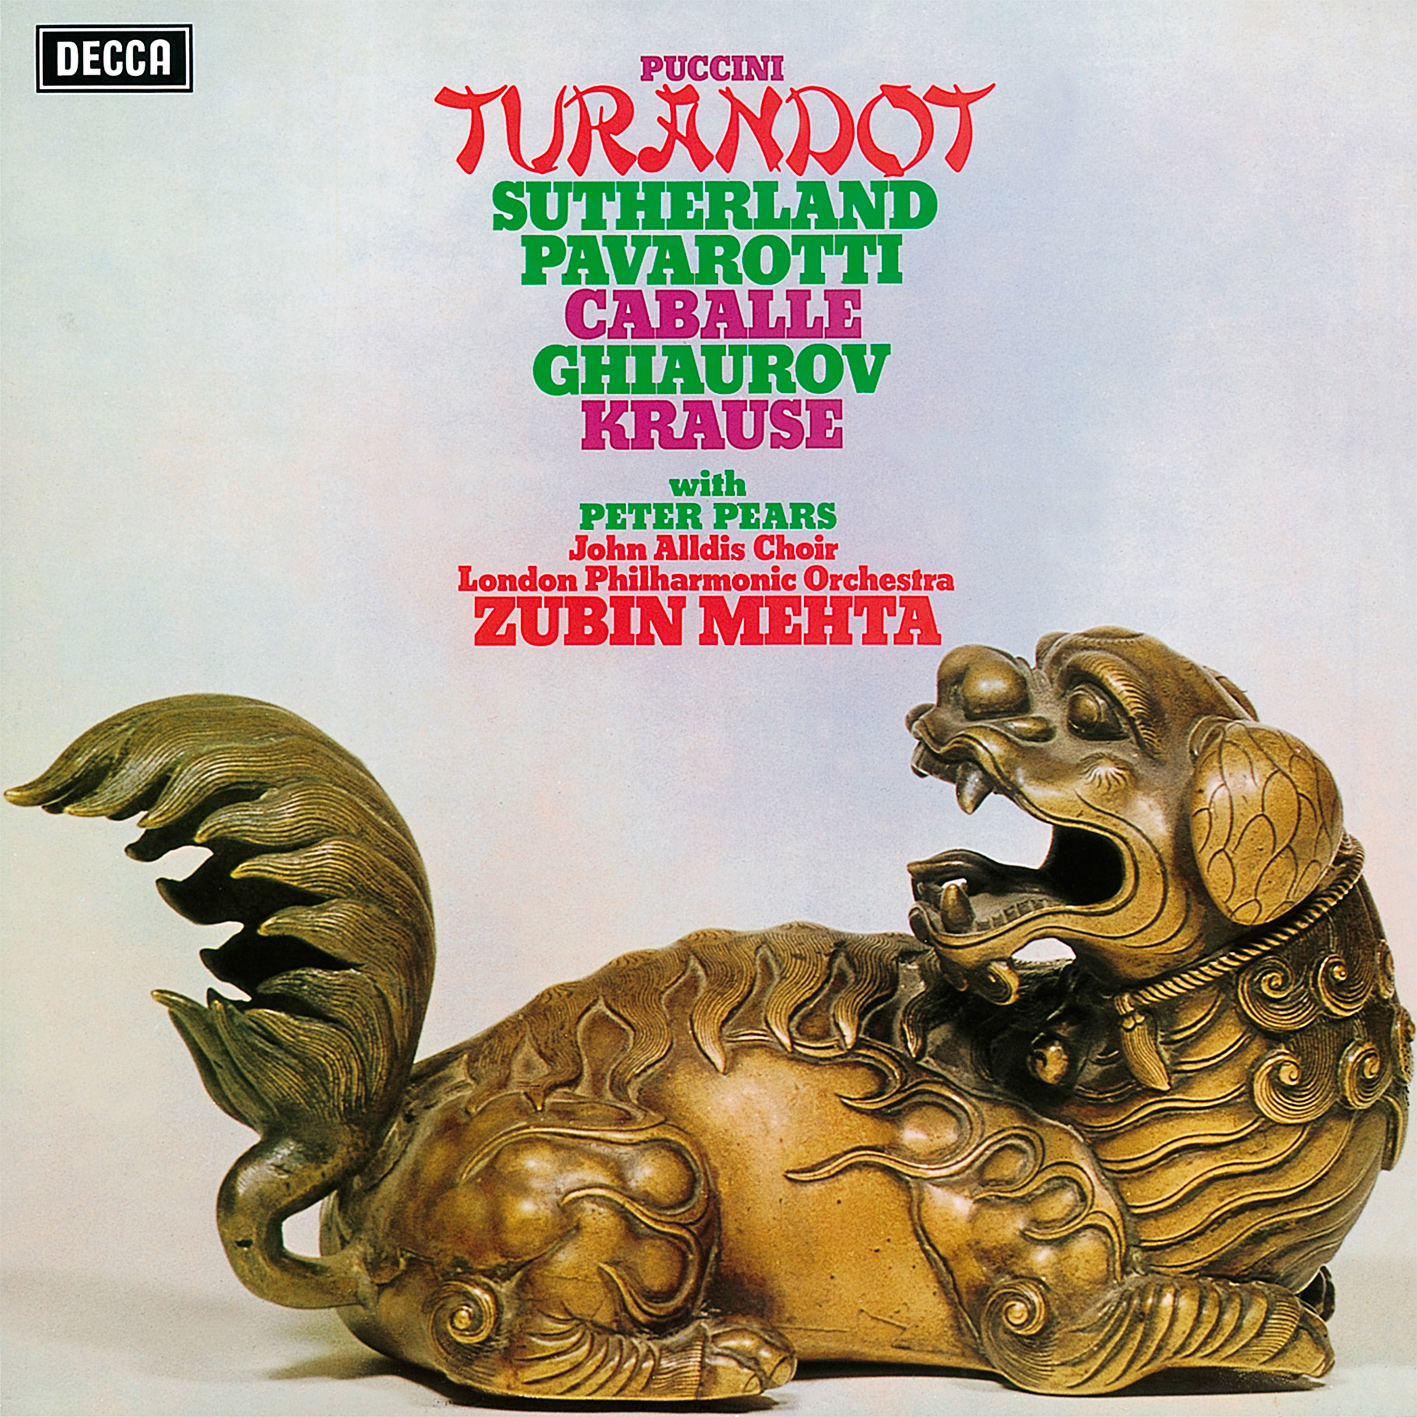 Sutherland, Pavarotti, Caballe, LPO, Zubin Mehta – Puccini. Turandot (1972/2014) [HDTracks FLAC 24bit/96kHz]